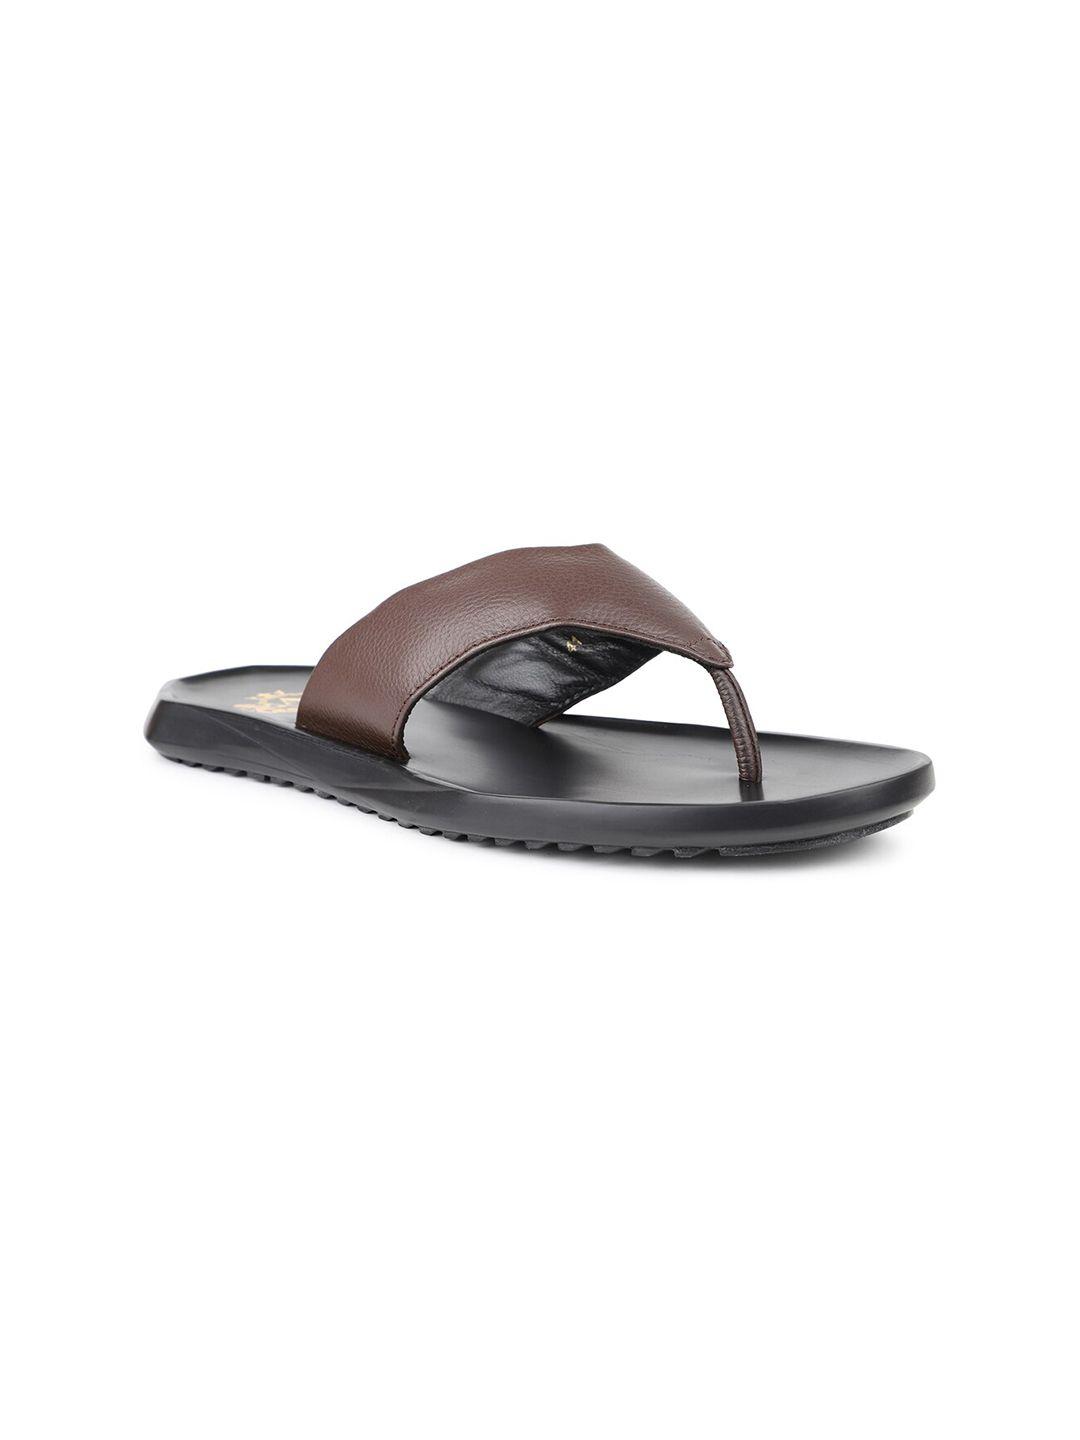 atesber men leather comfort sandals